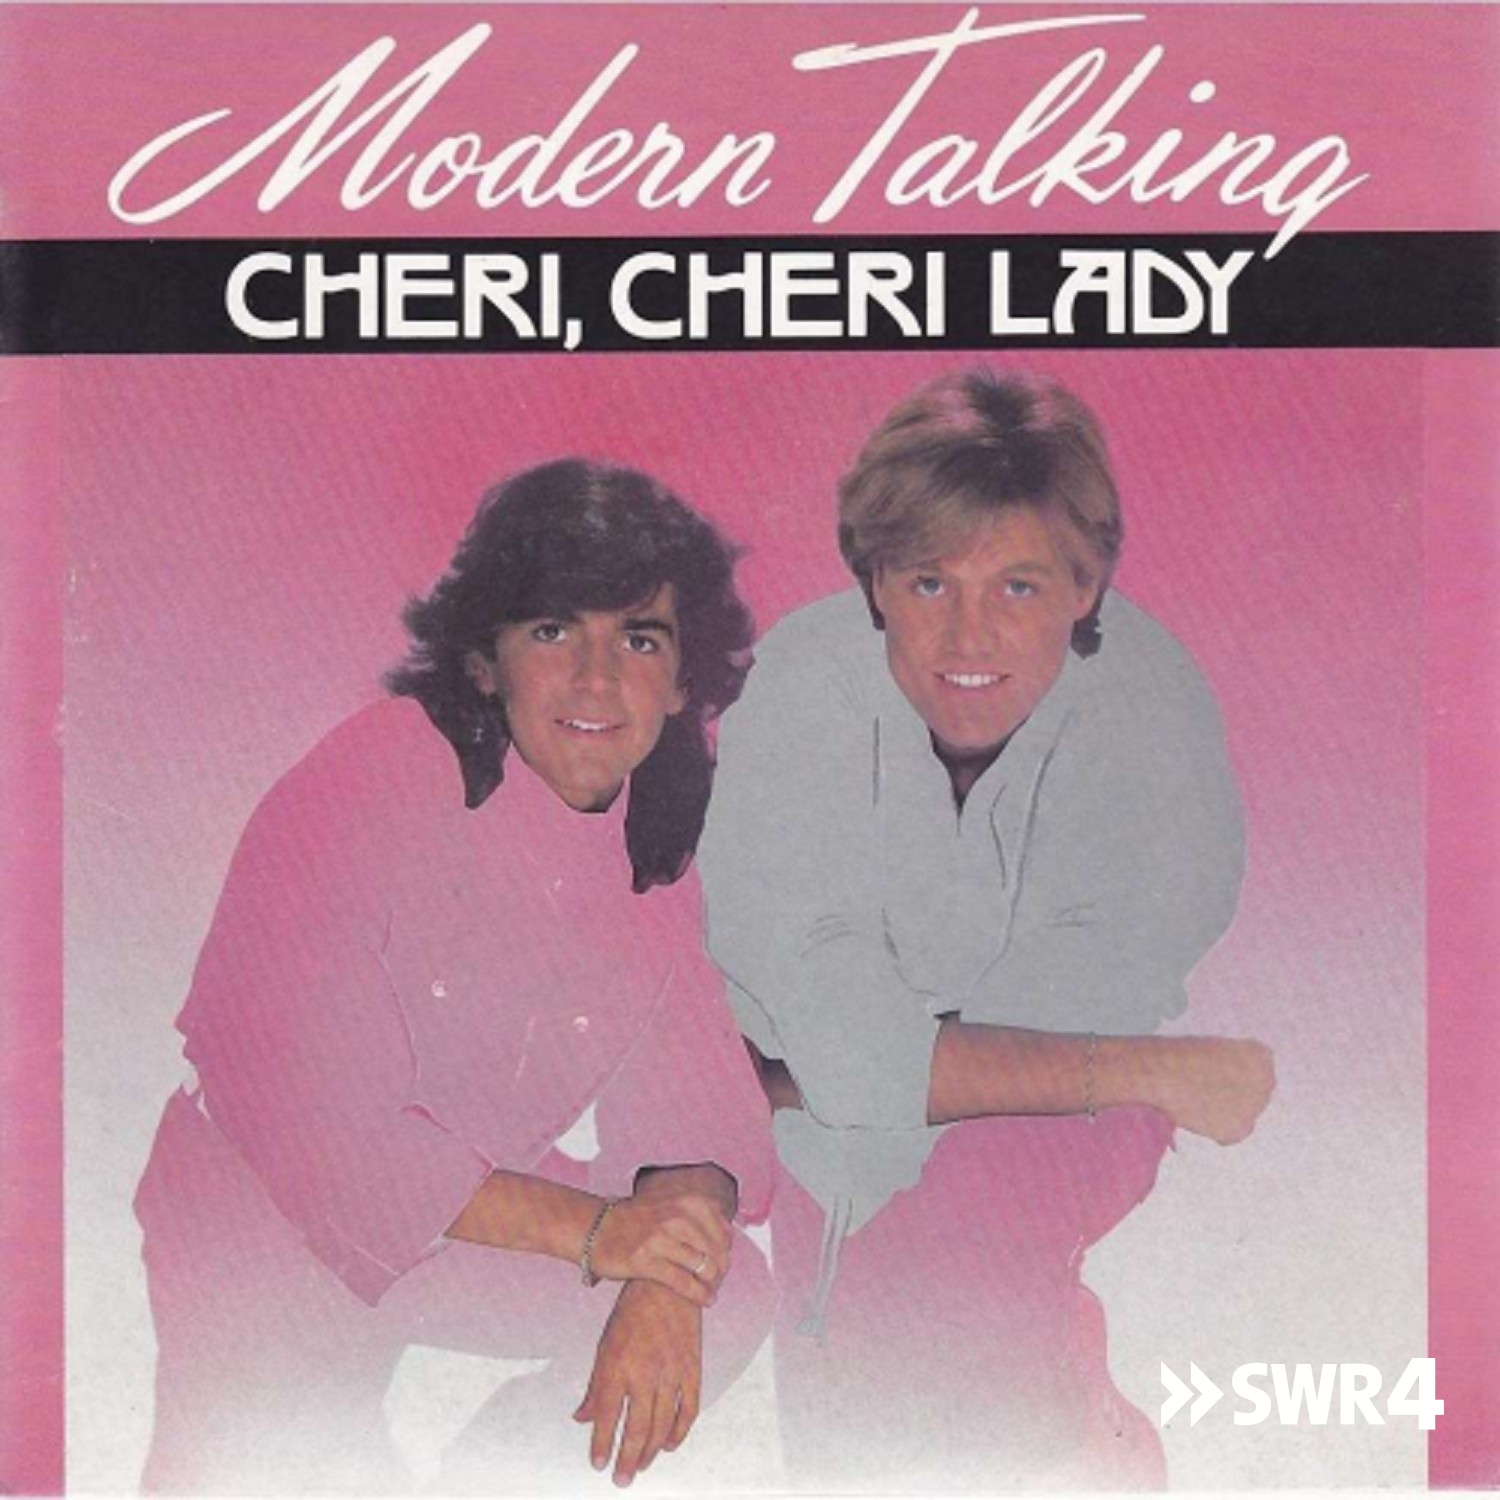 Песня модерн токинг шери шери леди. Modern talking - Cheri Cheri Lady пластинка. Modern talking Cheri Cheri Lady альбом. Модерн токинг Шери Лейди.